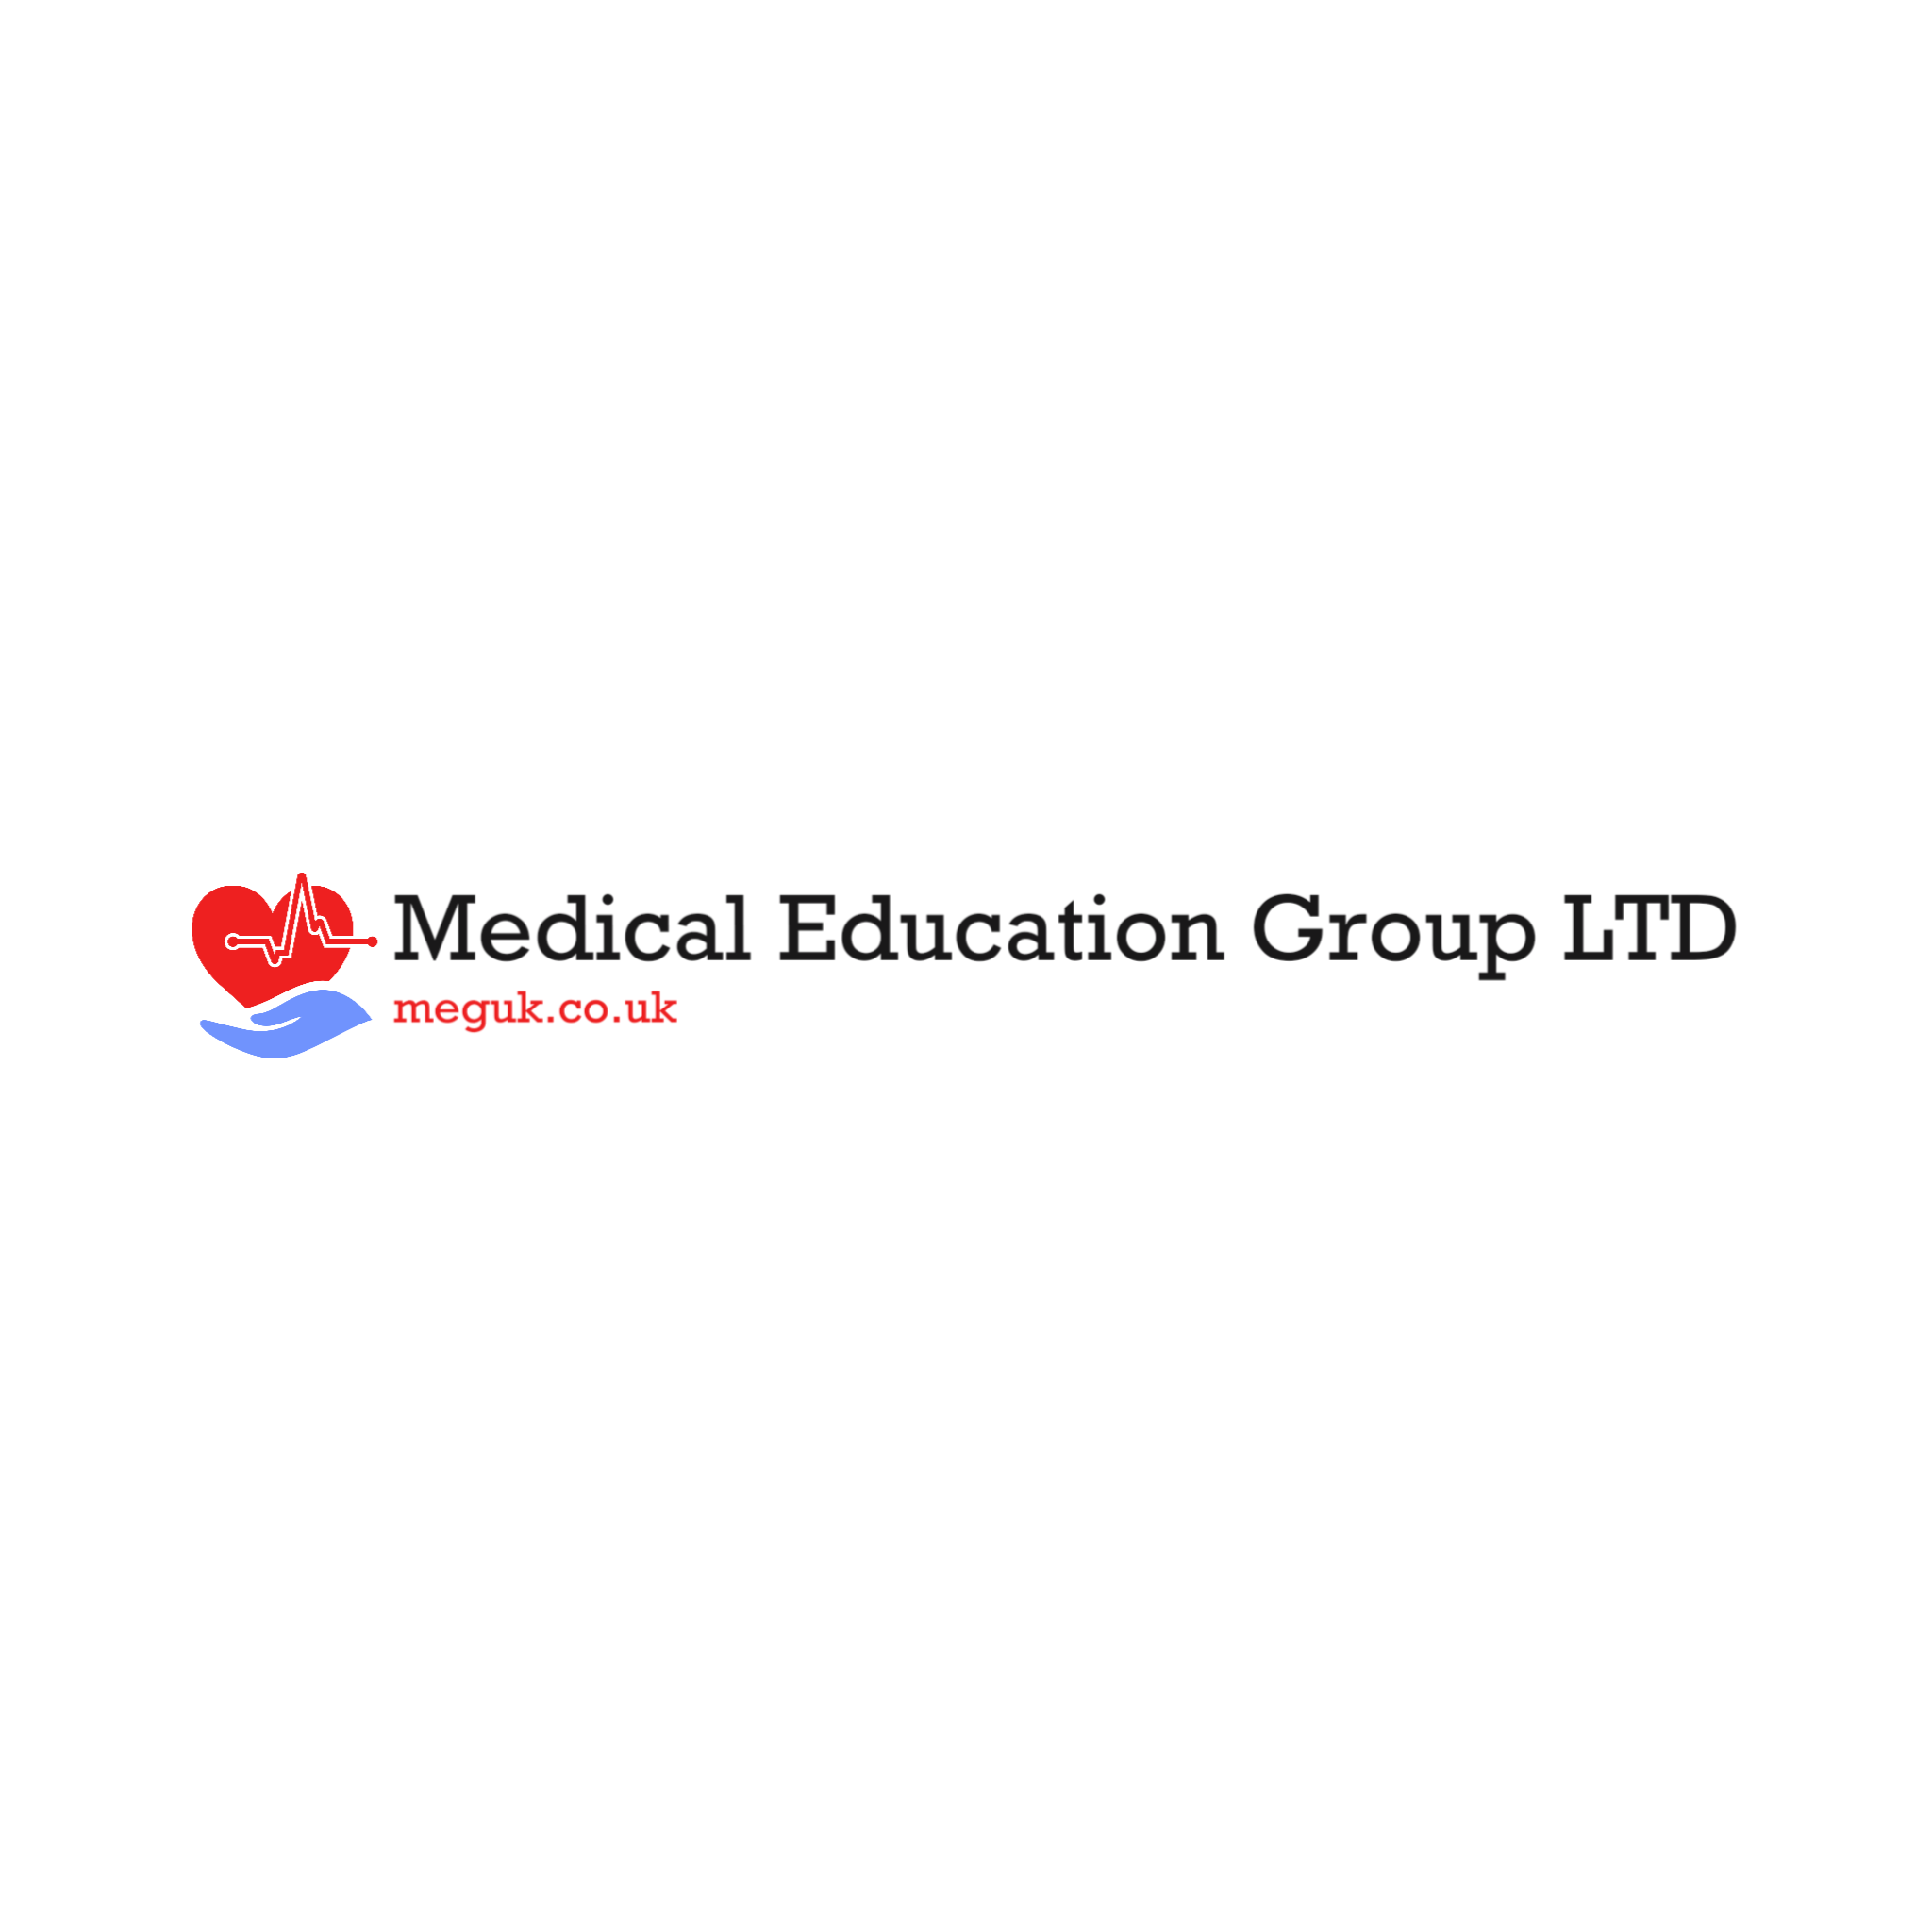 Medical Education Group LTD